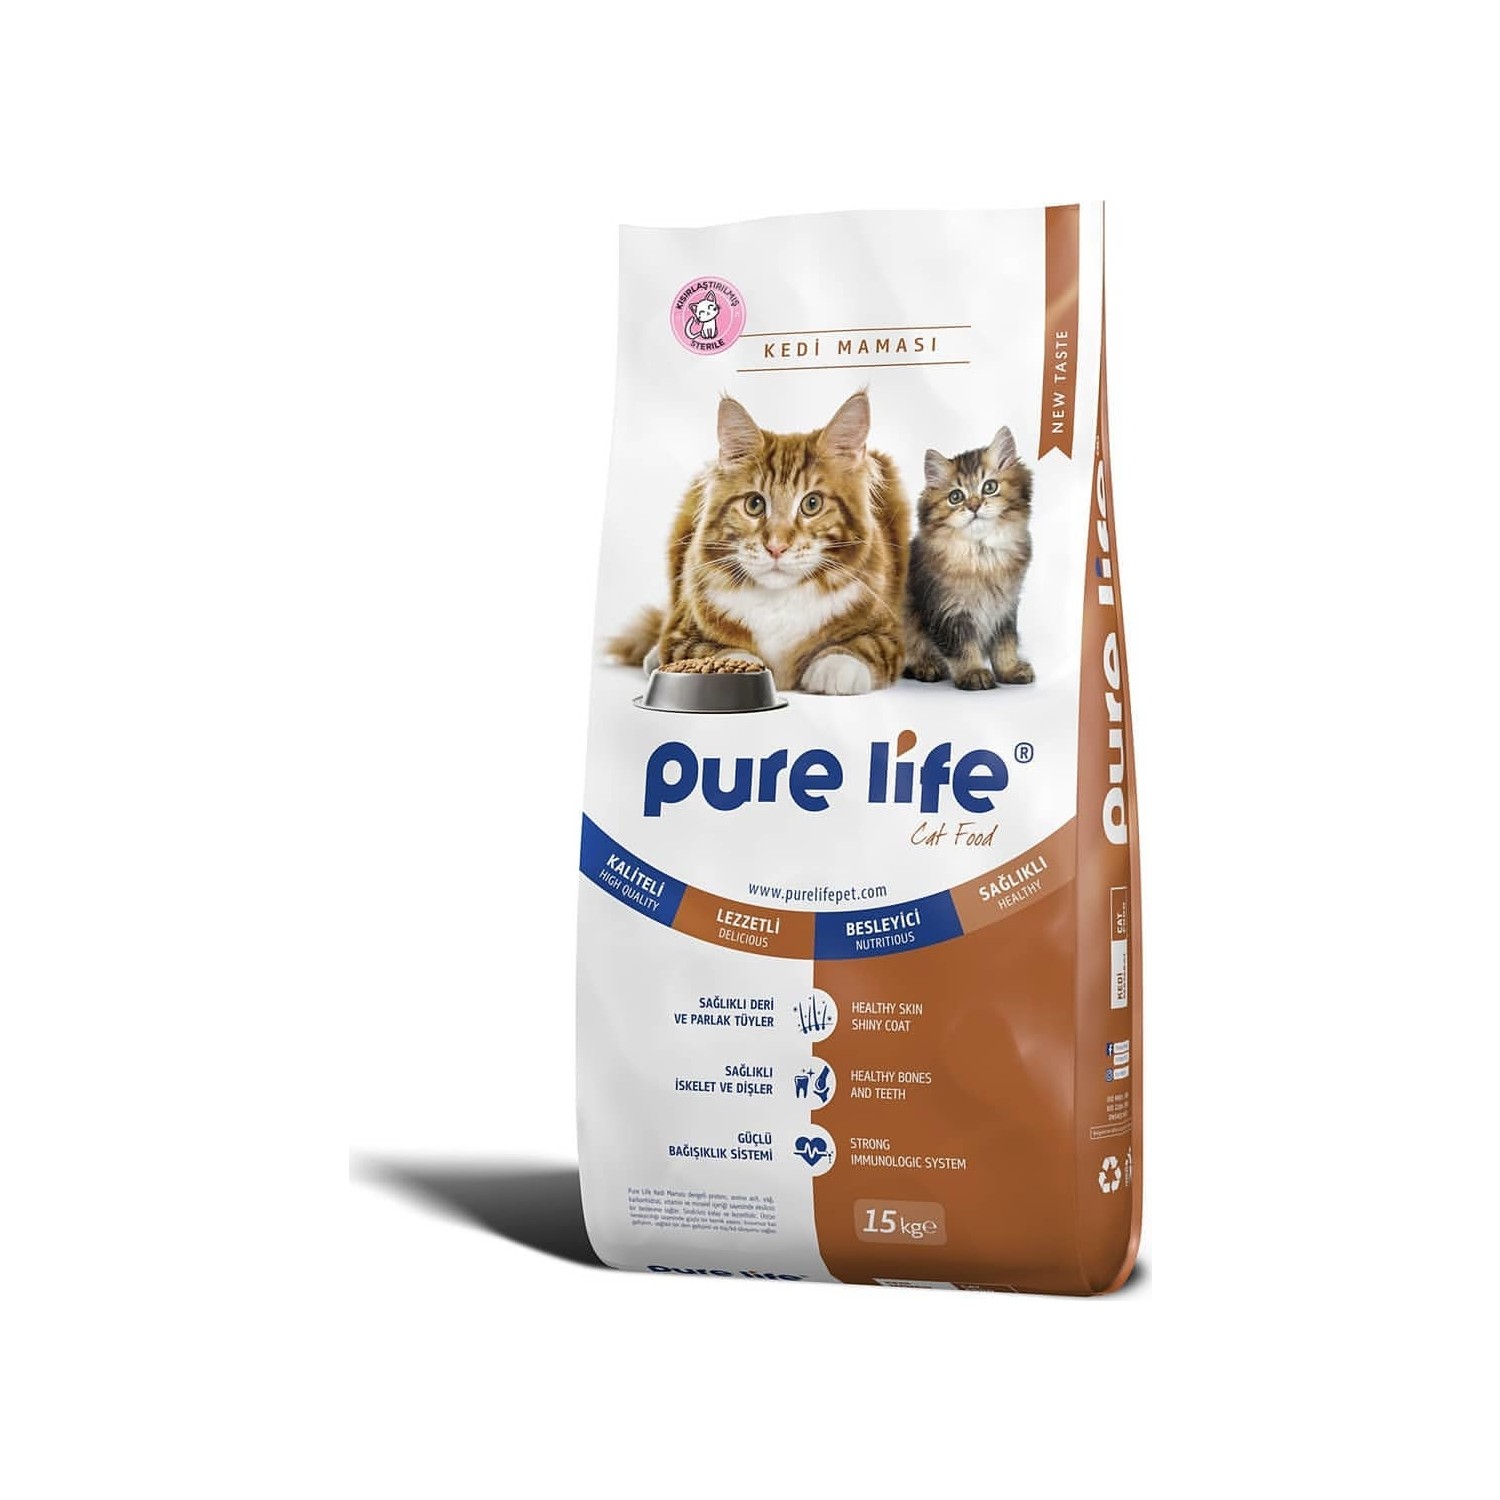 Pure Life Kısırlaştırılmış Kedi Maması 15 kg Fiyatı